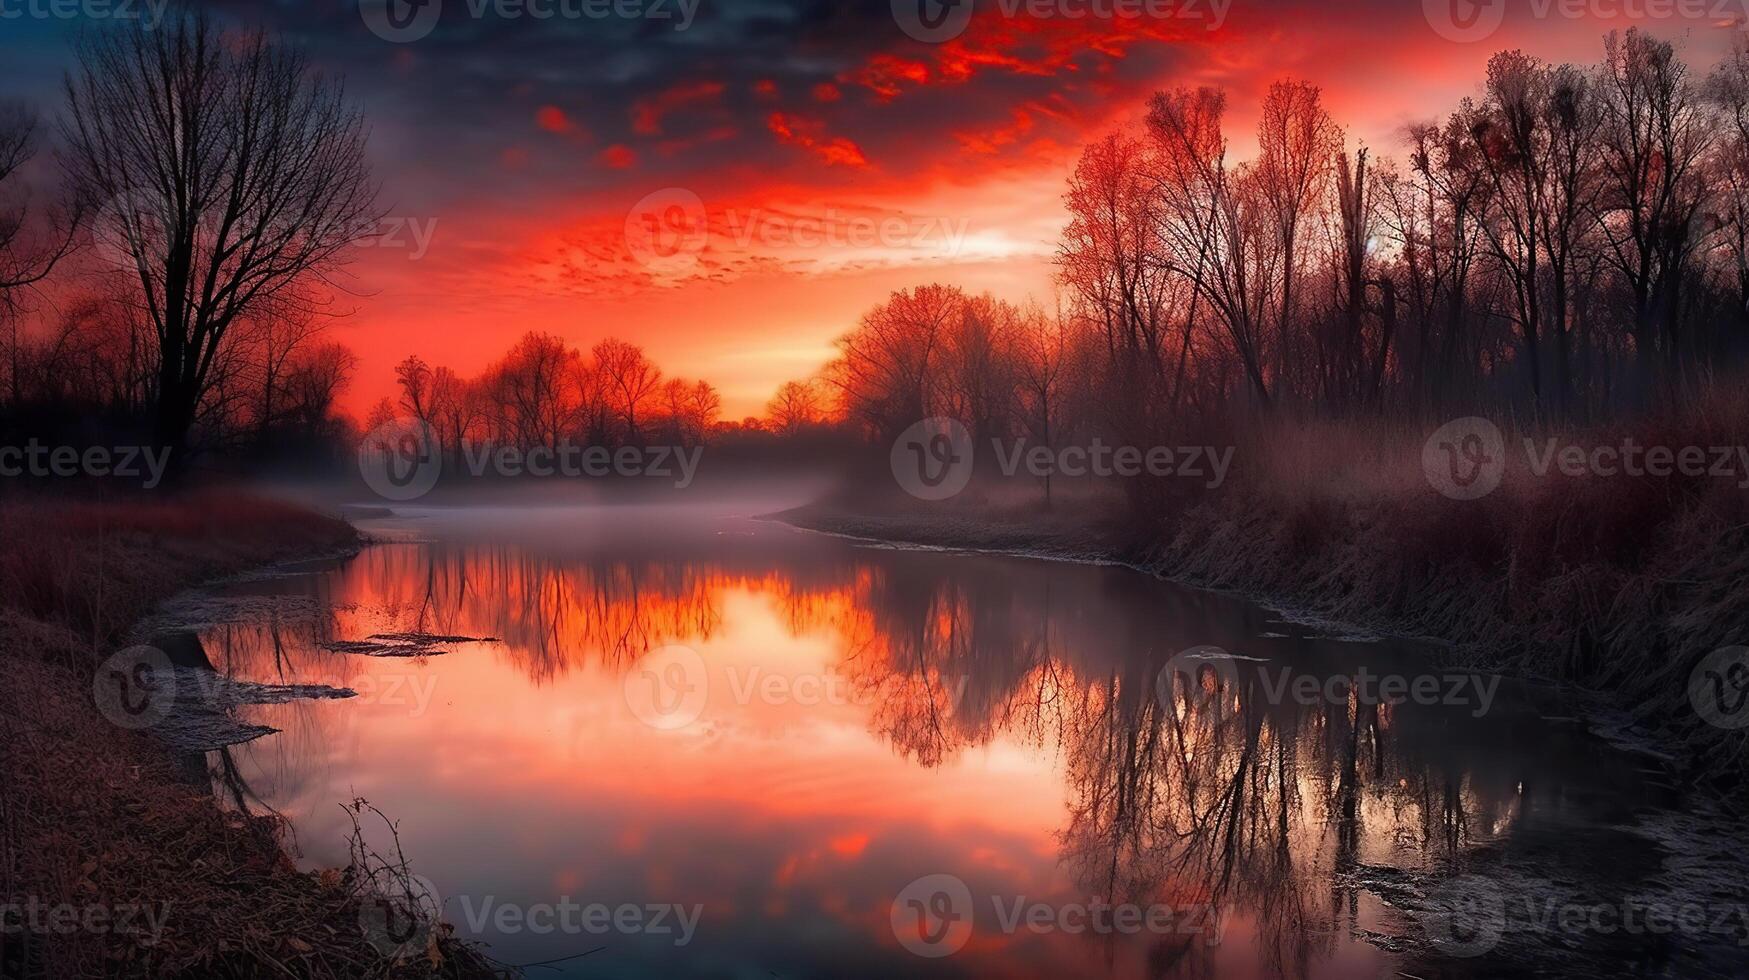 A Blaze of Beauty - Capturing the Most Vibrant Sunrise Landscapes, photo